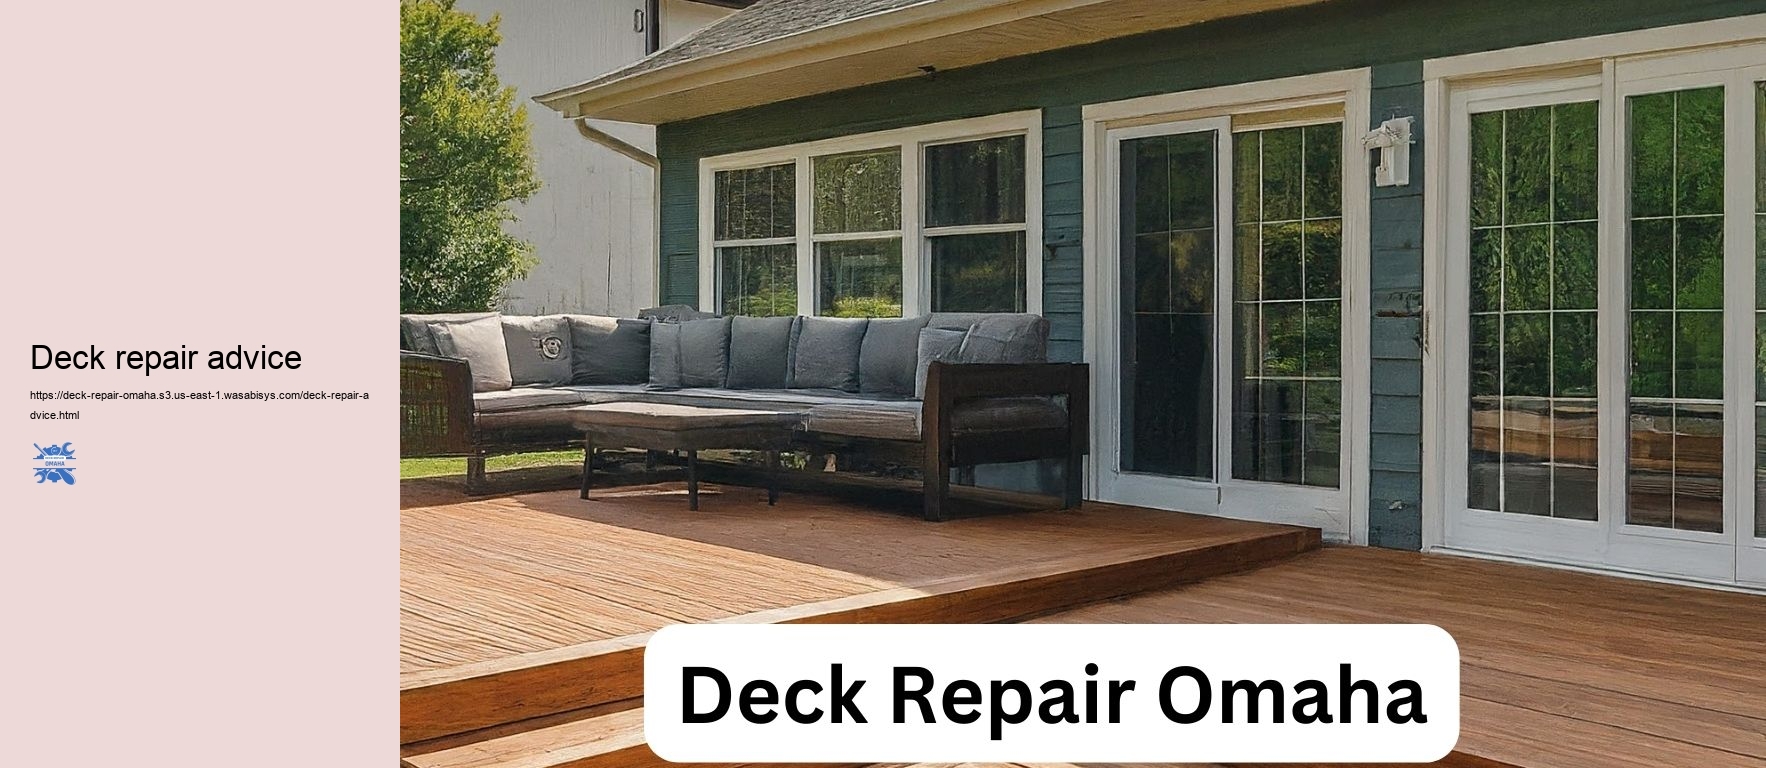 Deck repair advice